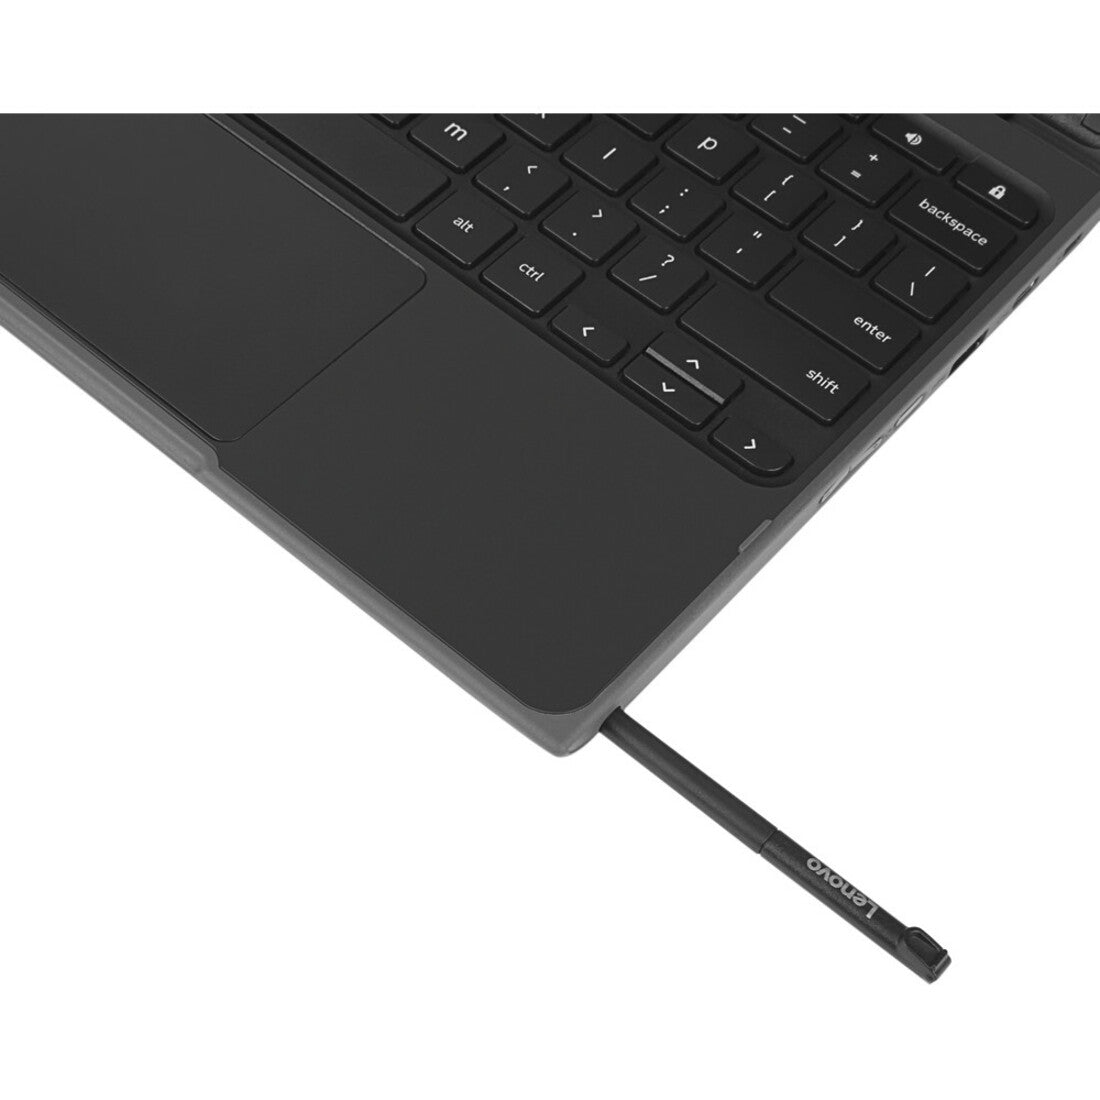 Lenovo 4X80R08264 500e Chrome Pen, Notebook Device Supported